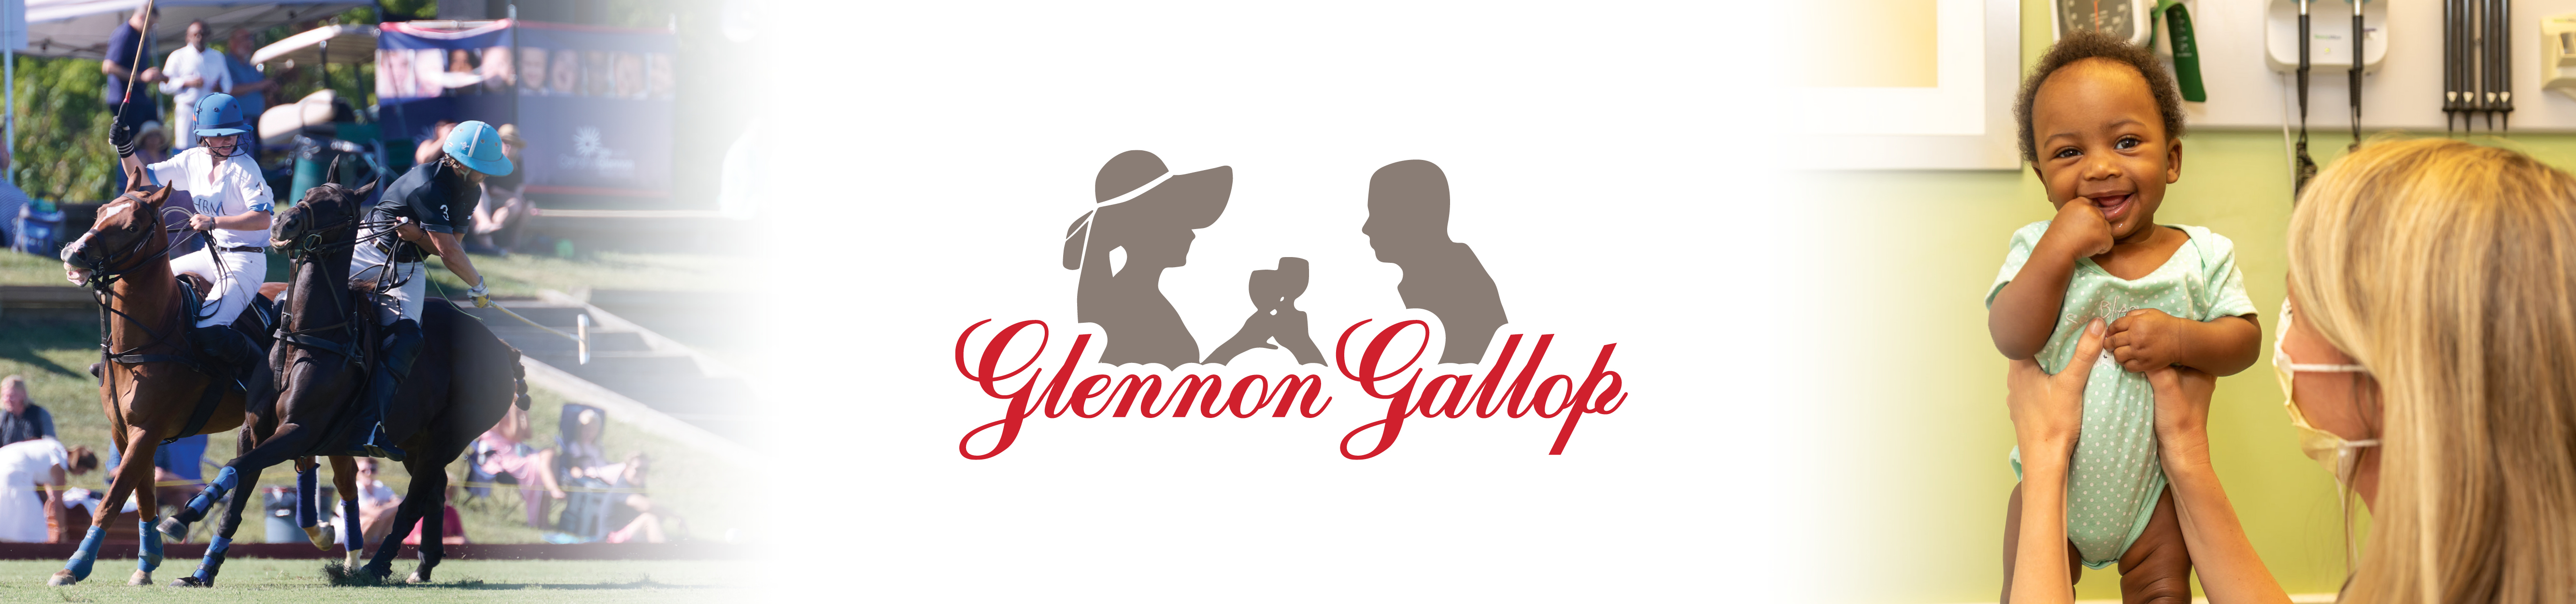 Glennon Gallop benefiting Danis Pediatric Center - Saturday, September 21